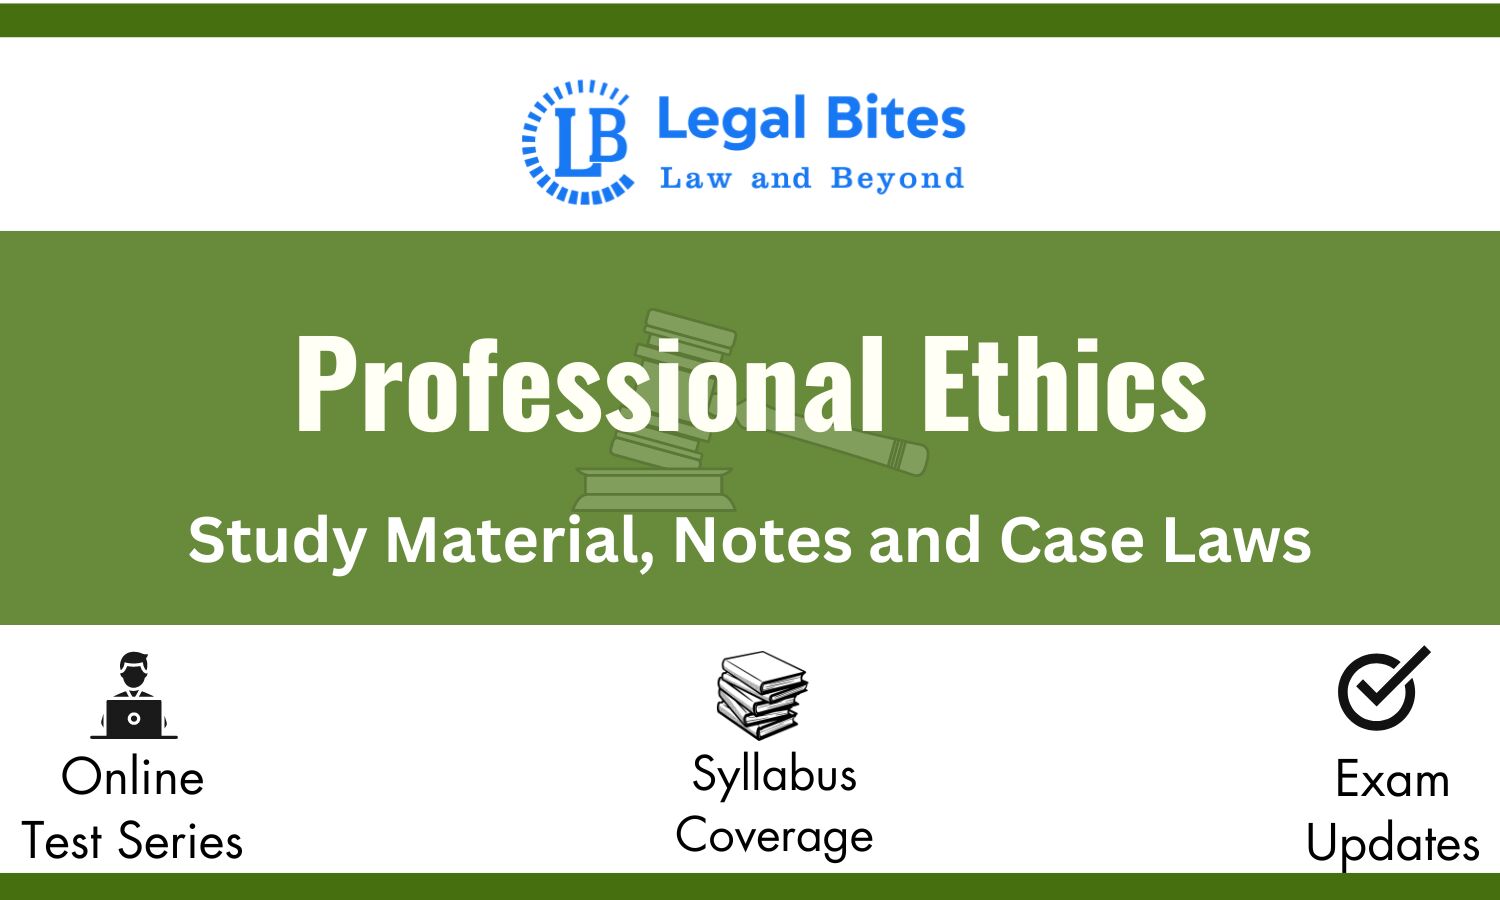 laws ethics case study